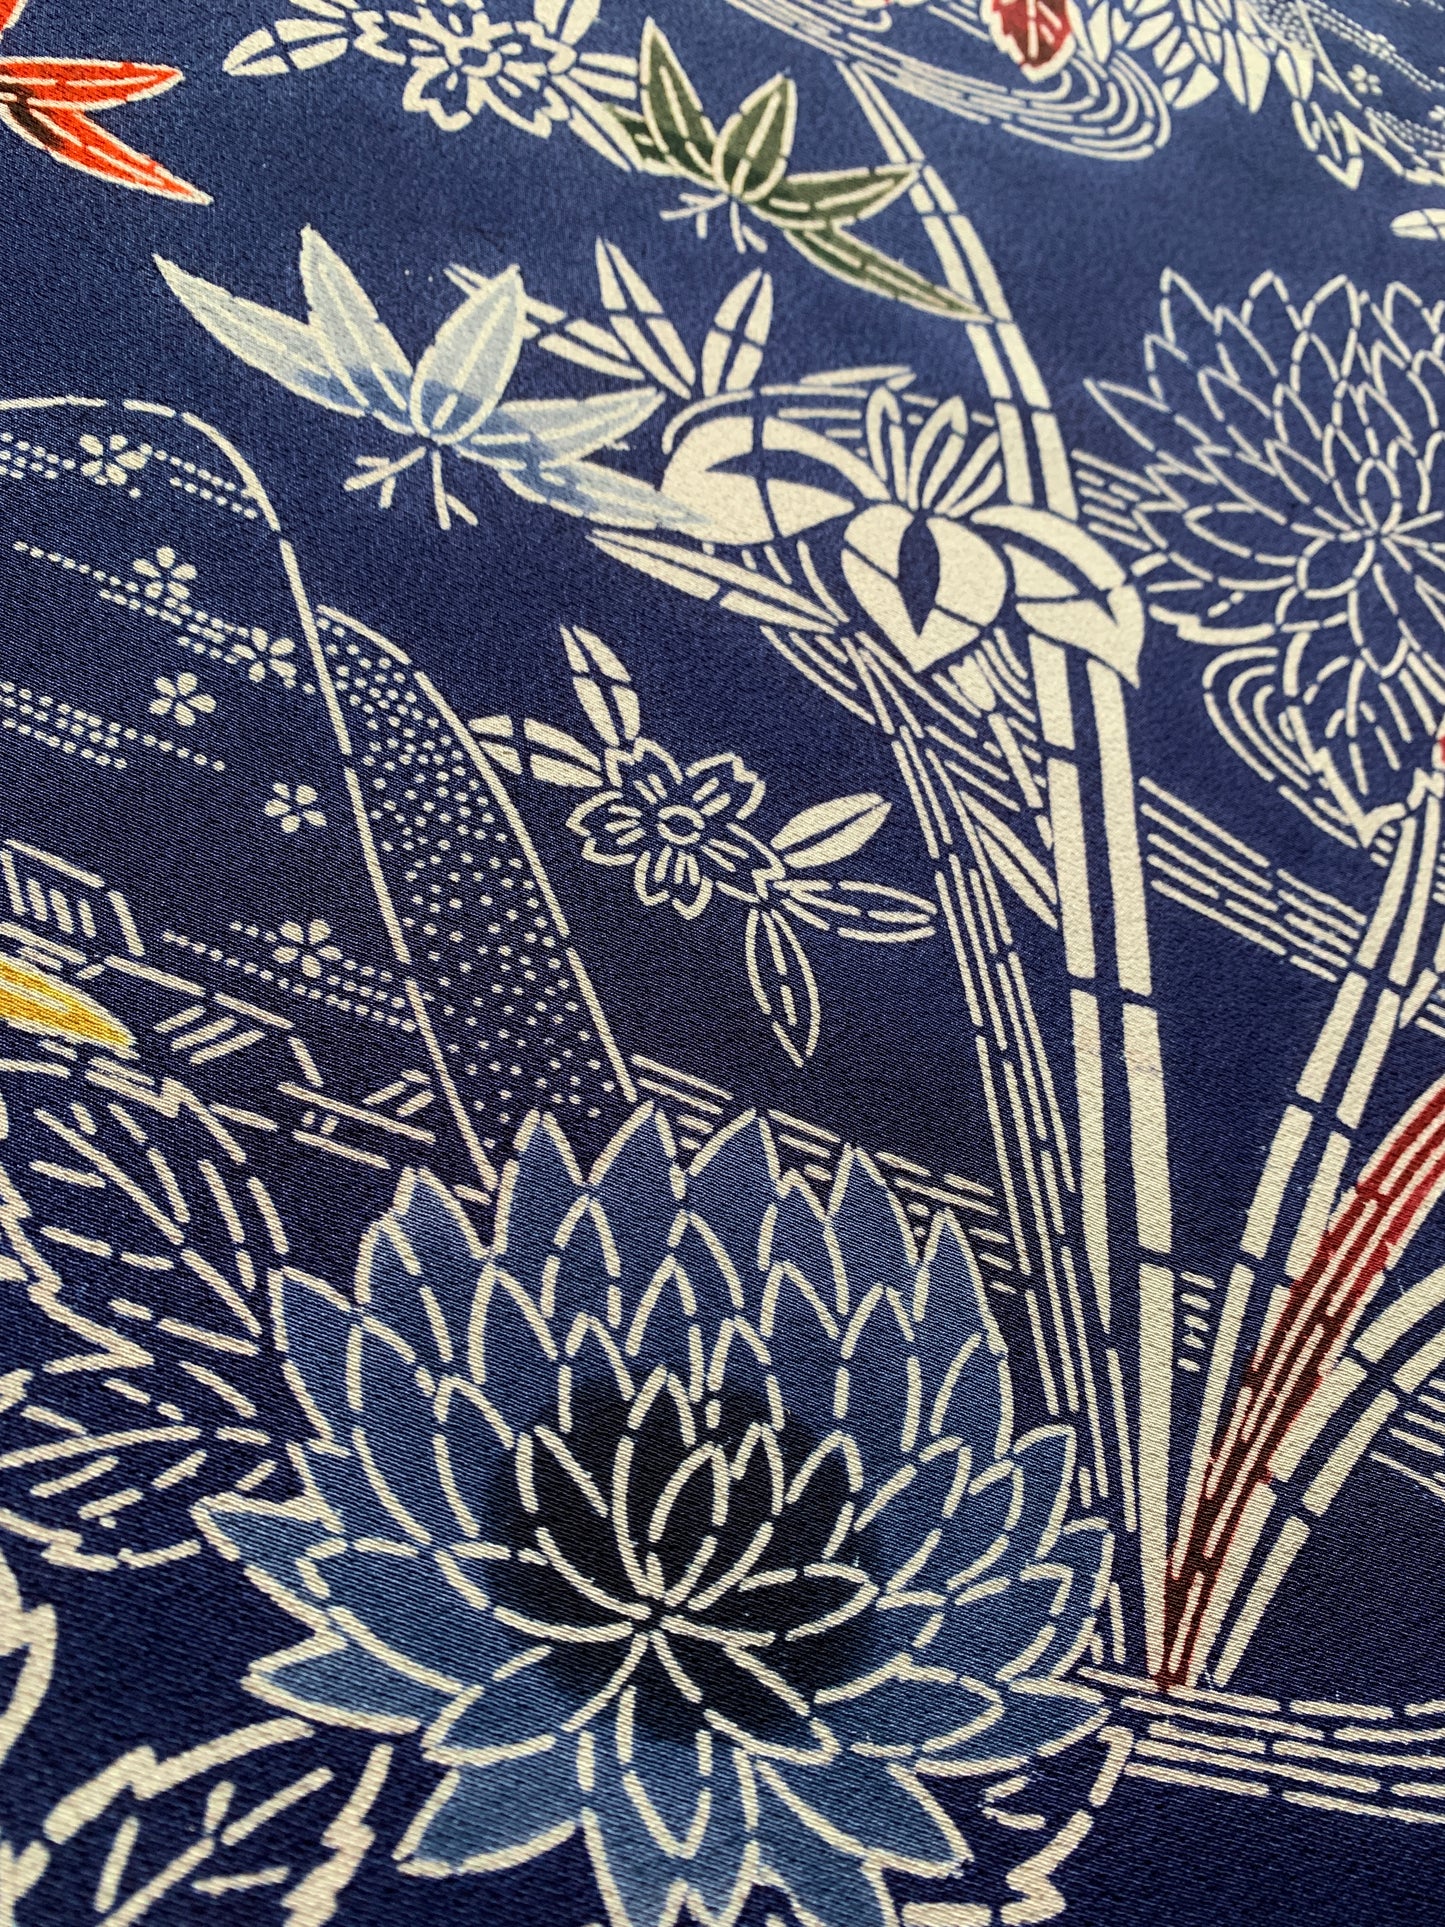 Kimono fabric for custom dress order, fabric #84